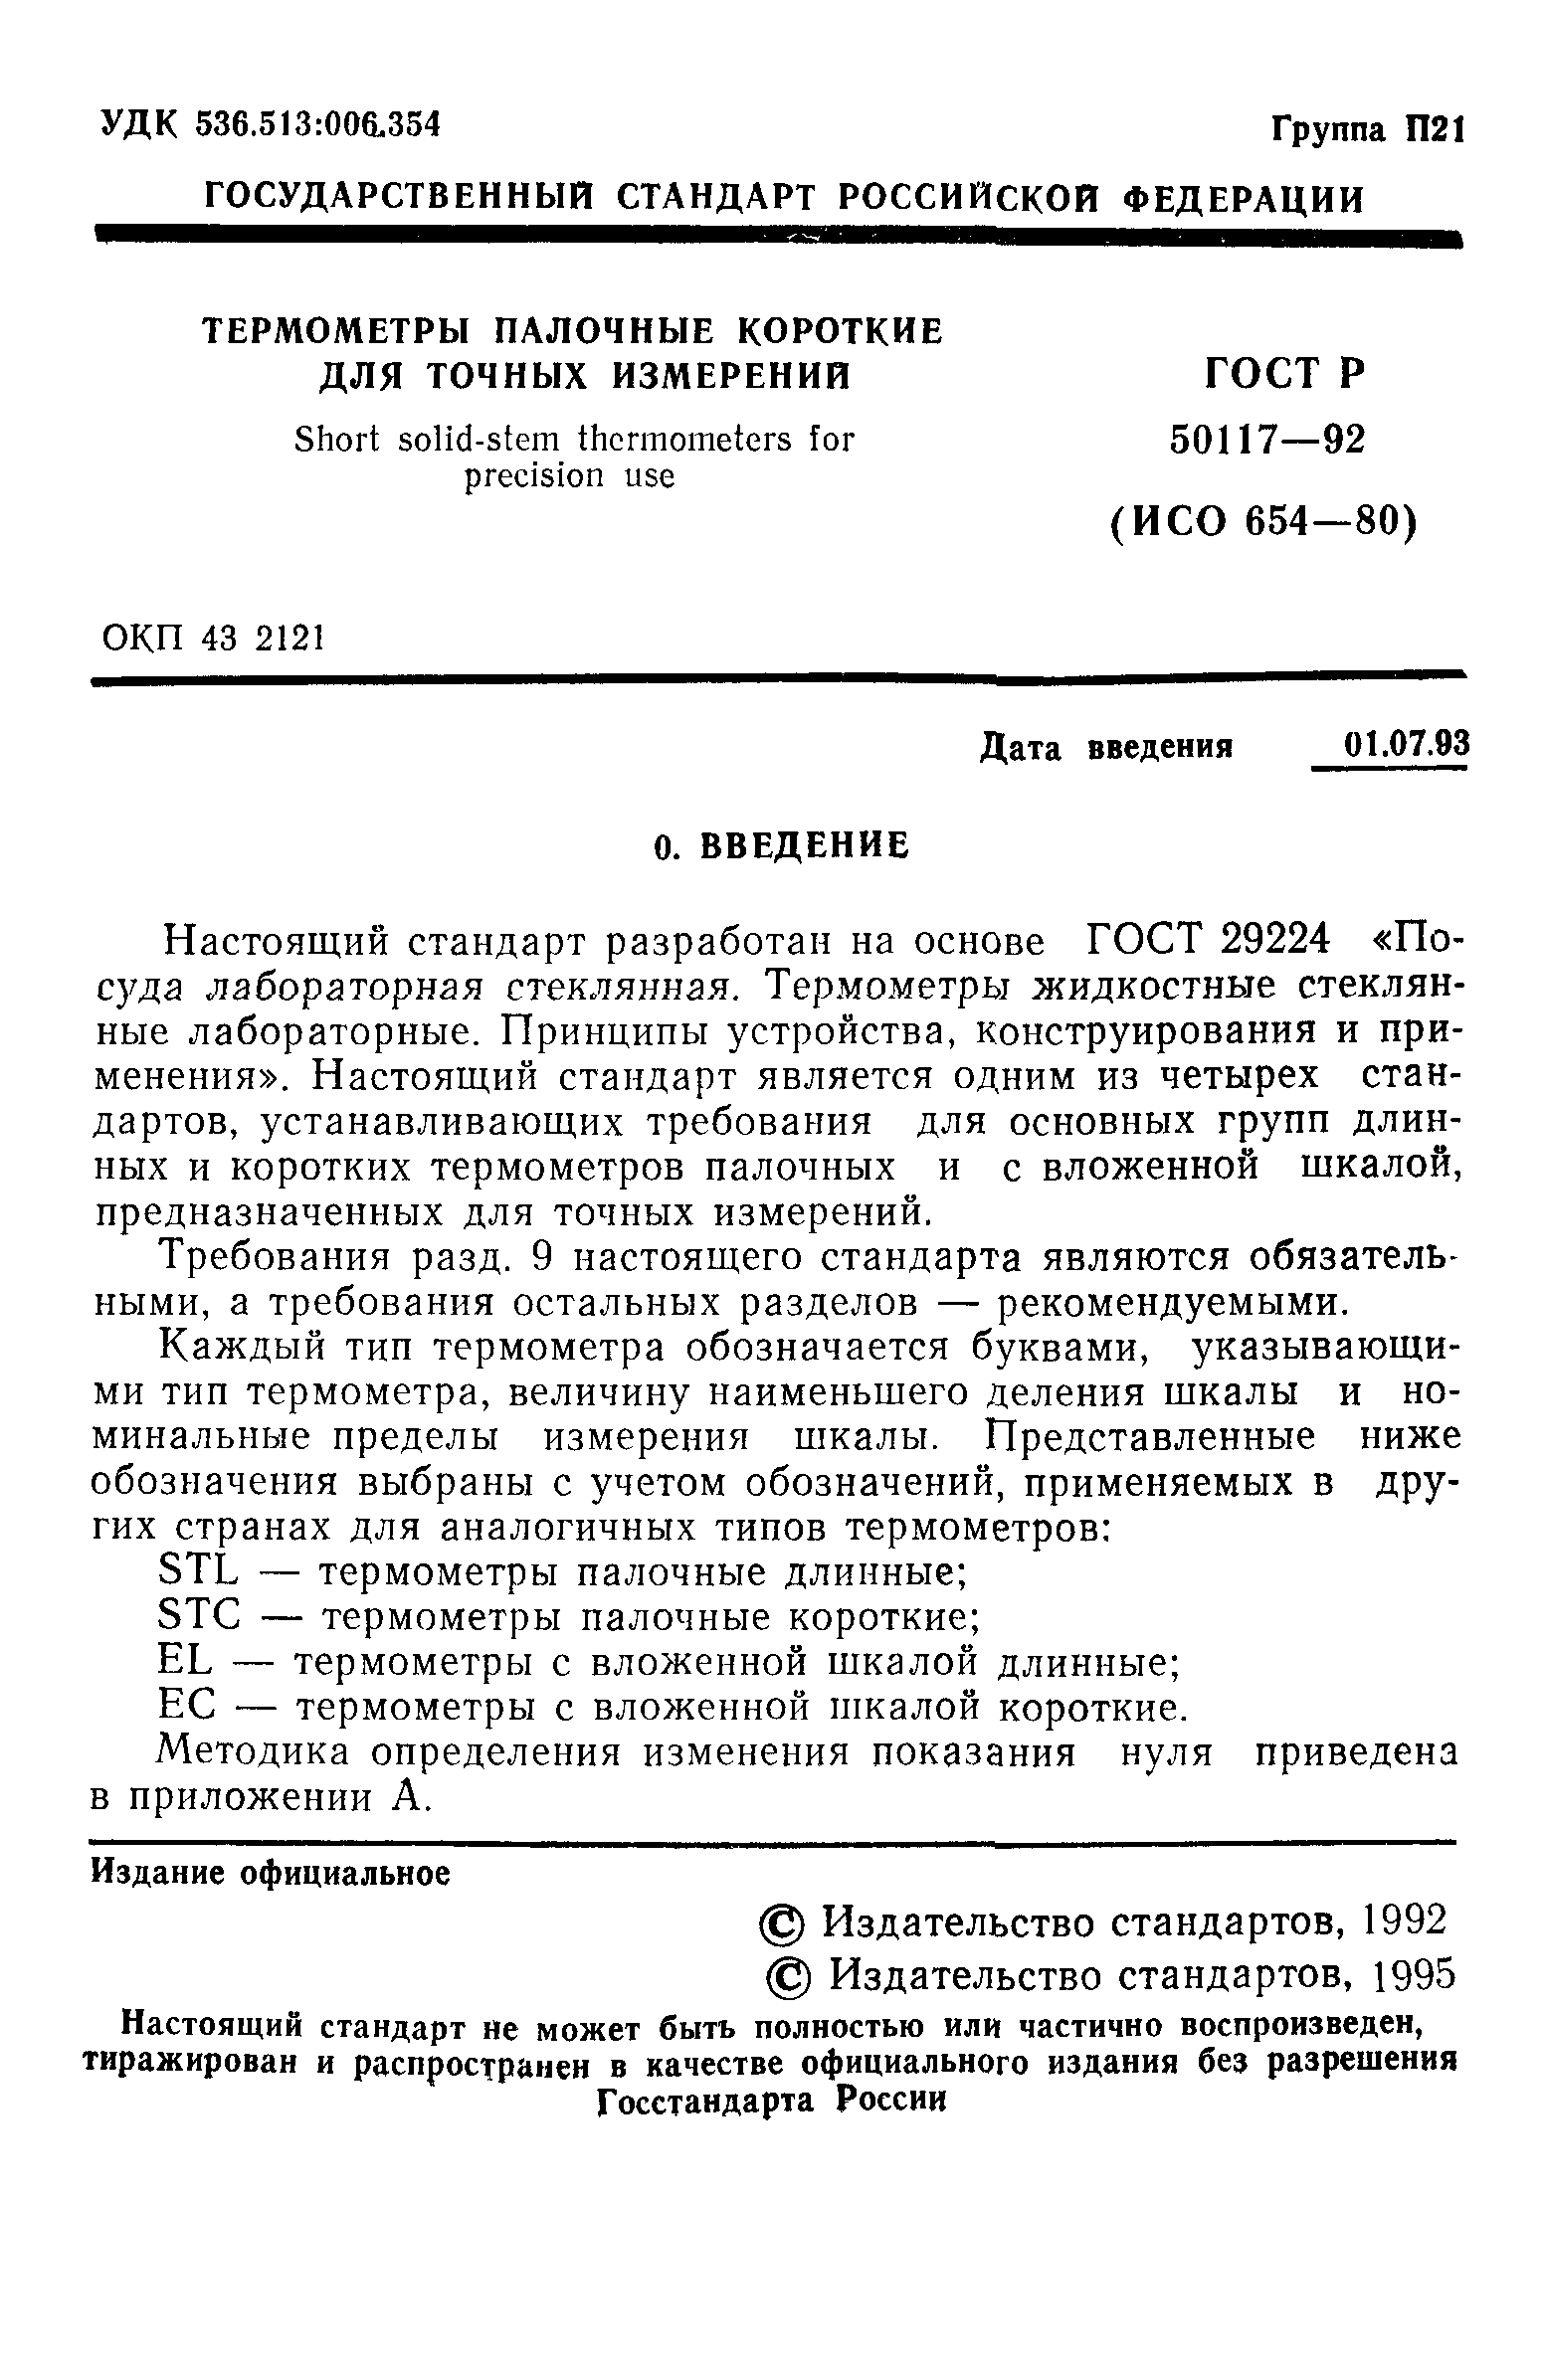 ГОСТ Р 50117-92